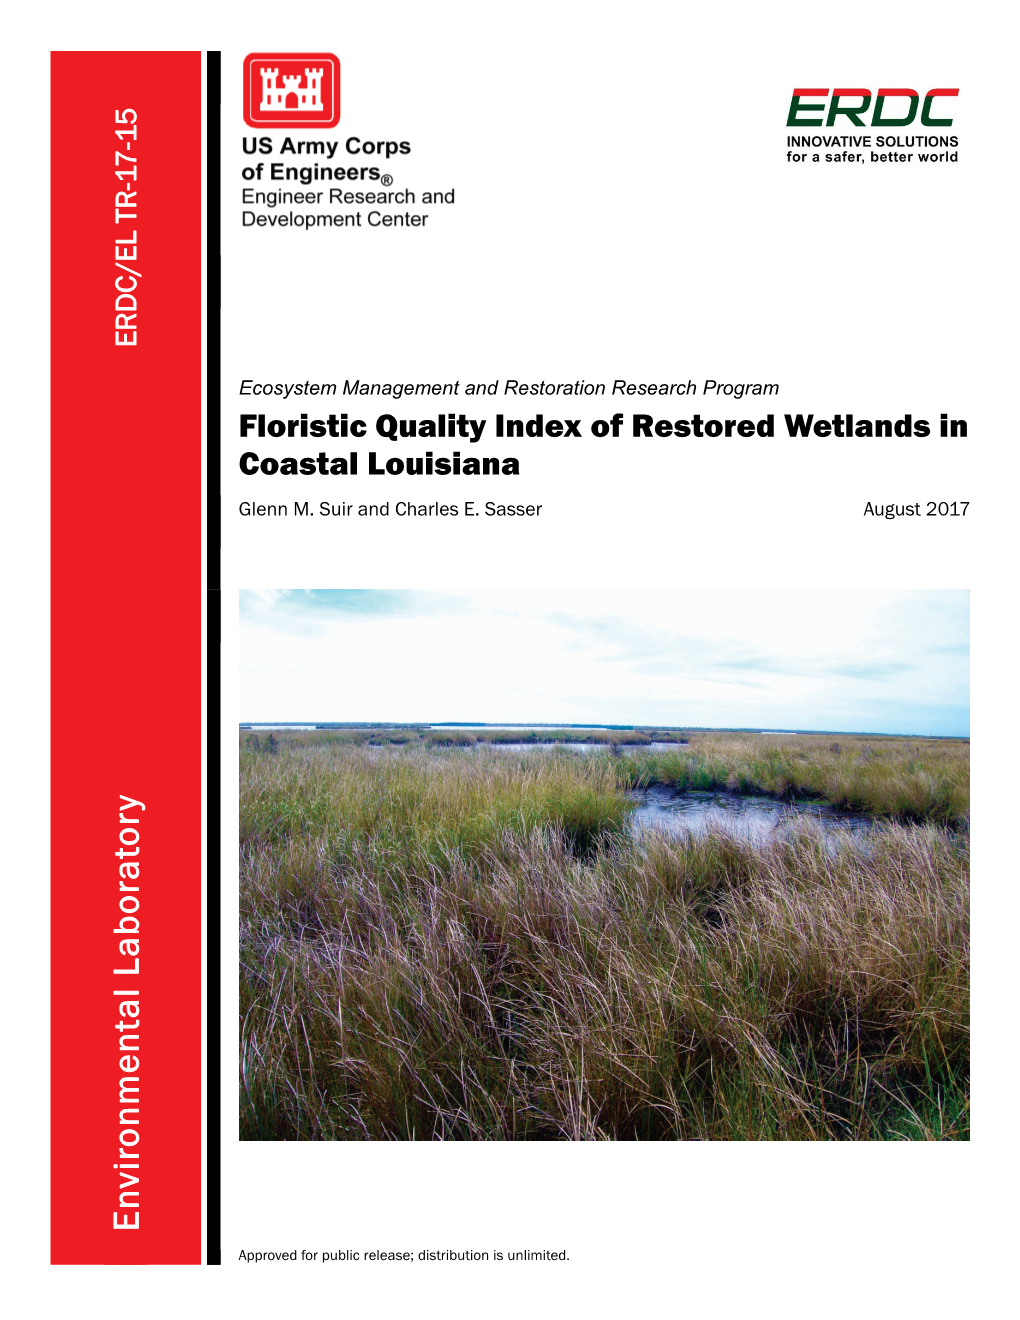 Floristic Quality Index of Restored Wetlands in Coastal Louisiana